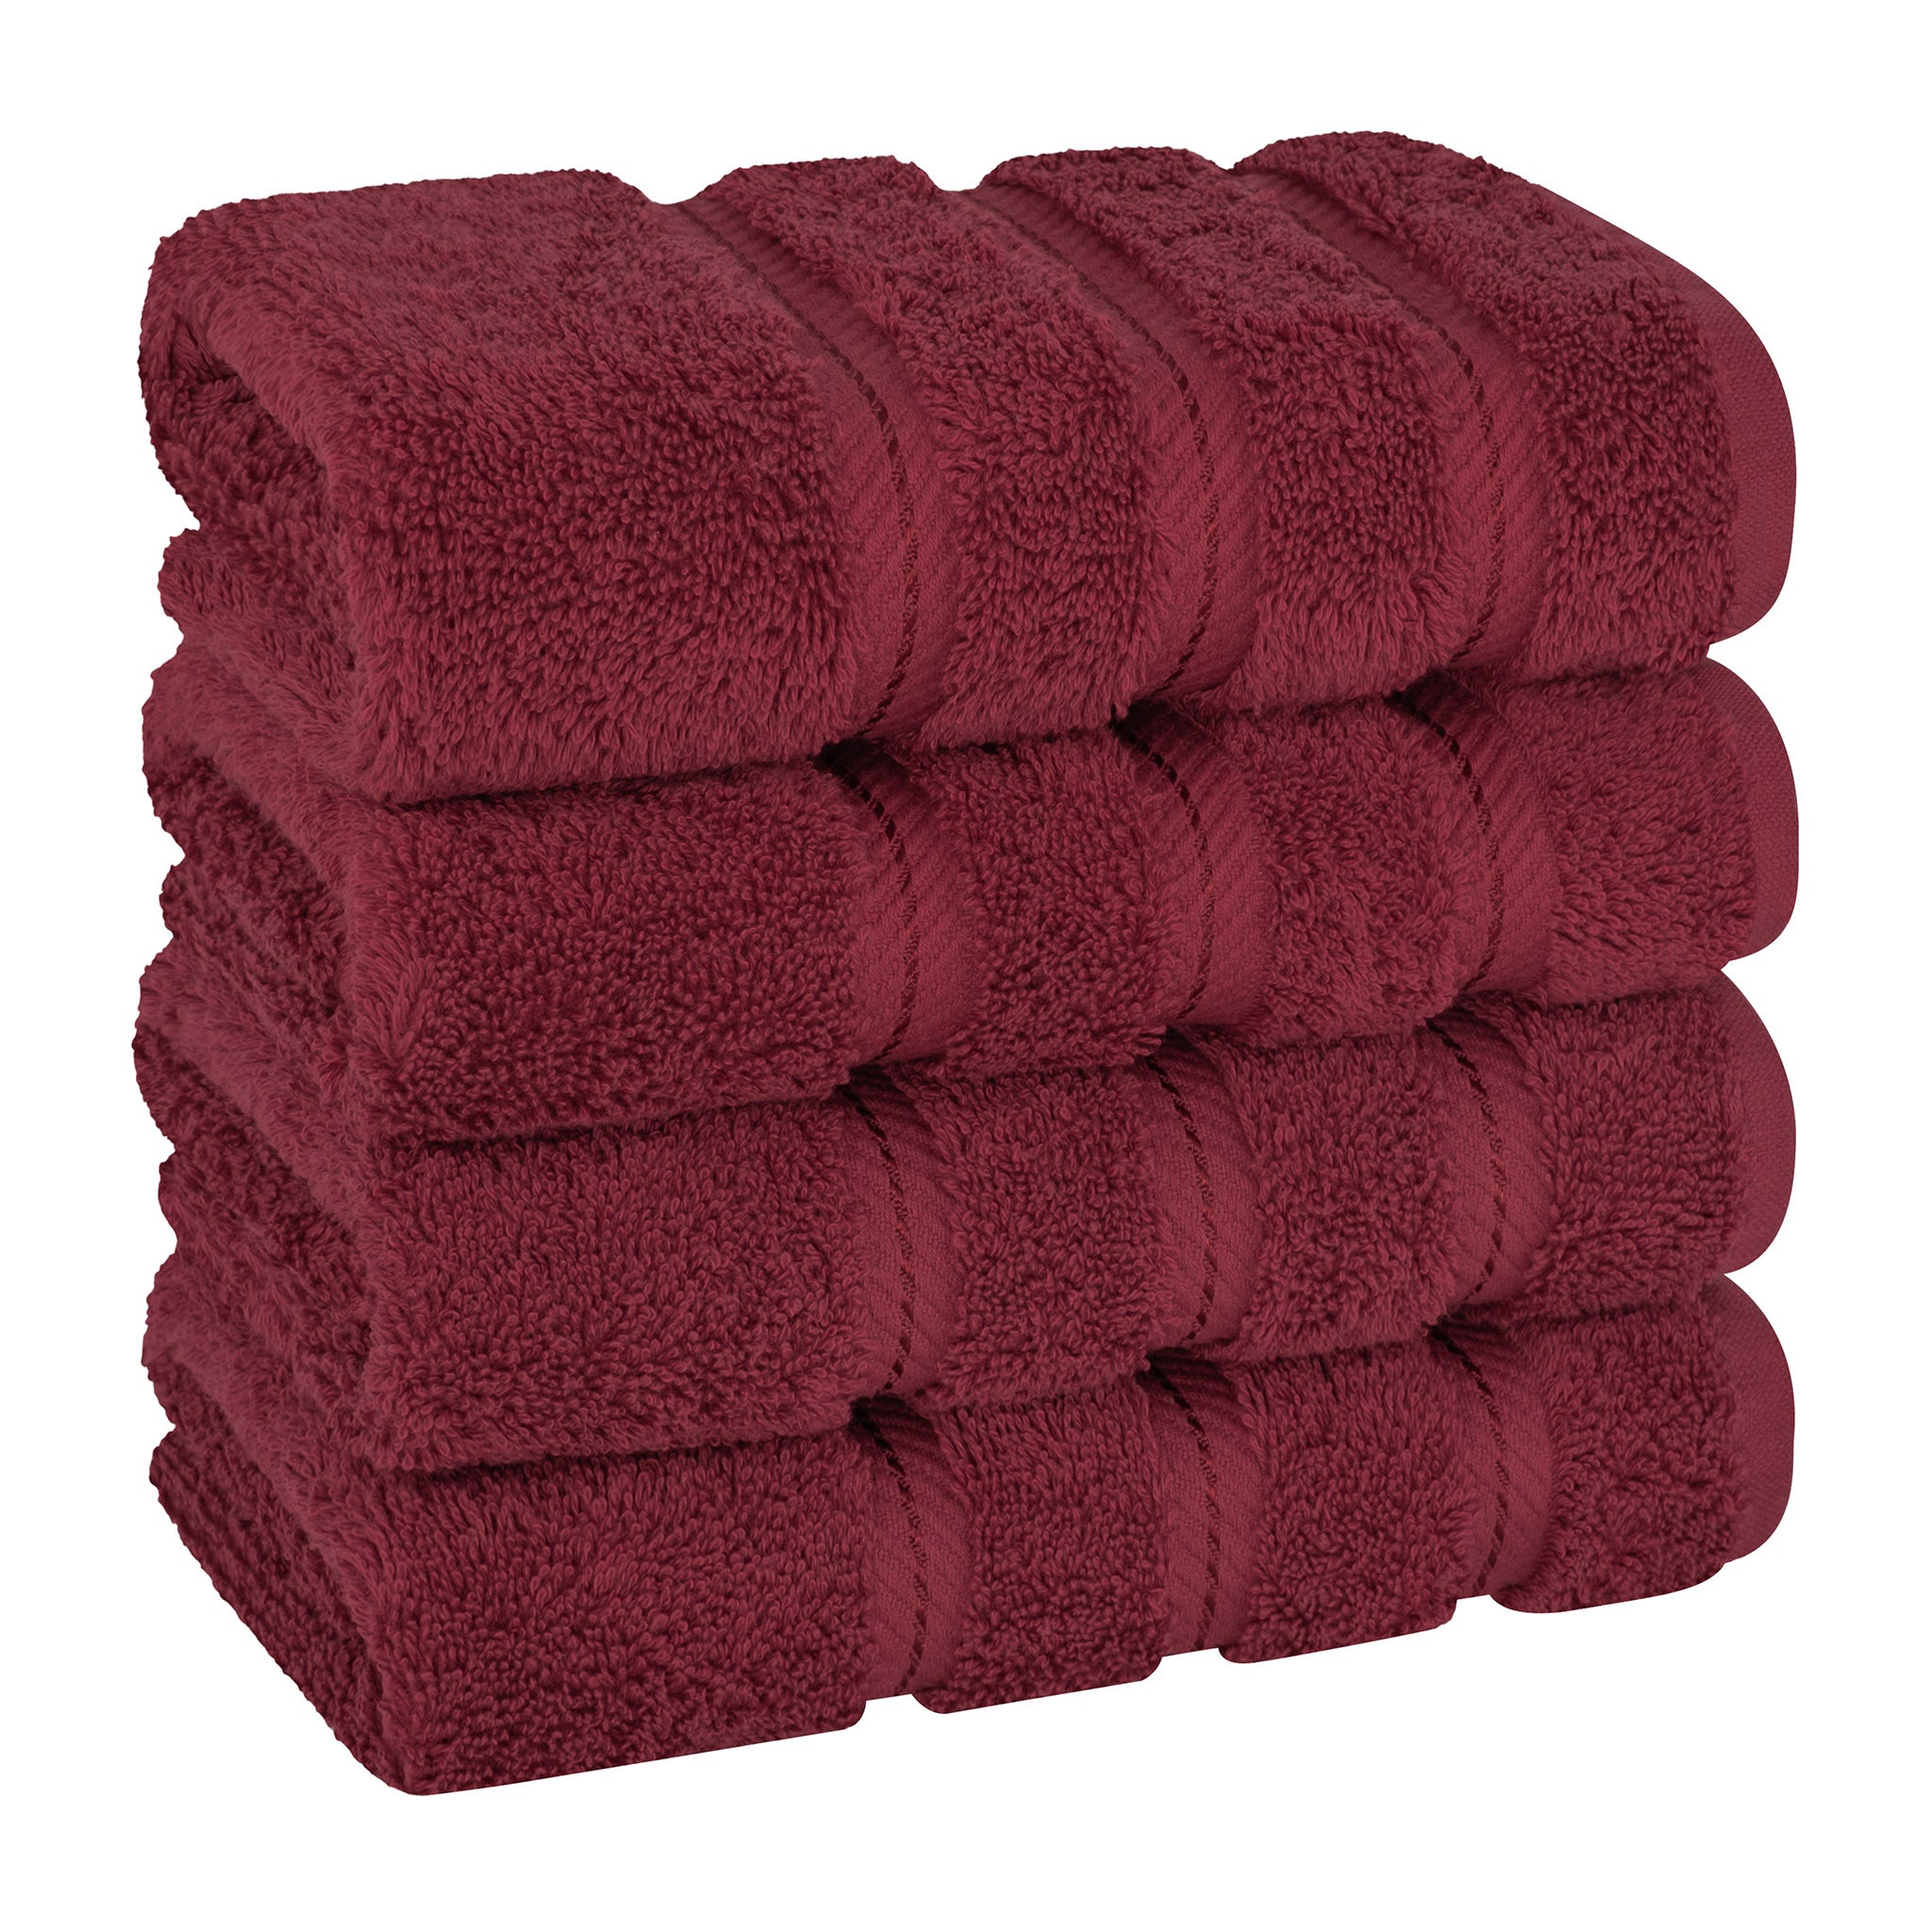  American Soft Linen 100% Turkish Cotton 4 Pack Hand Towel Set  bordeaux-red-1